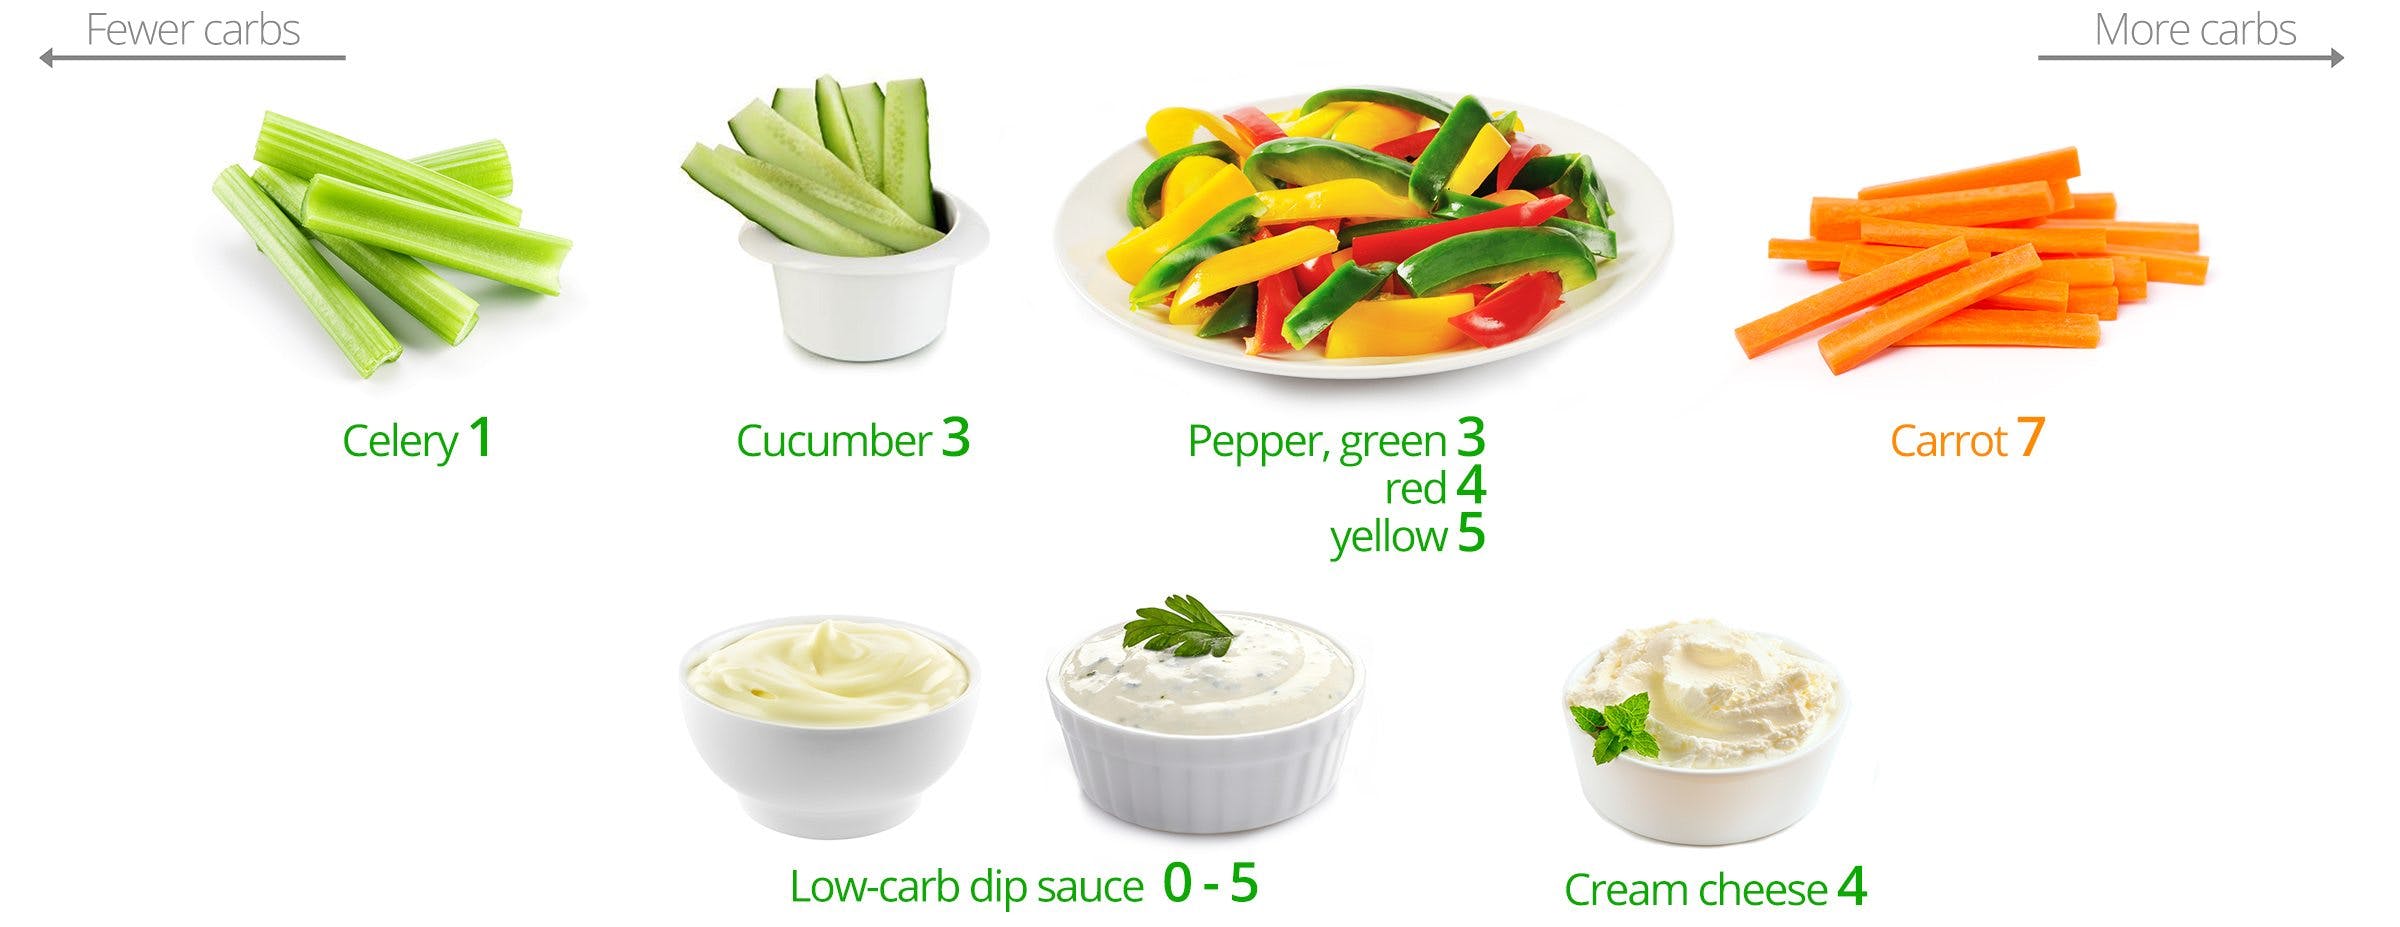 Low-carb snacks: vegetables